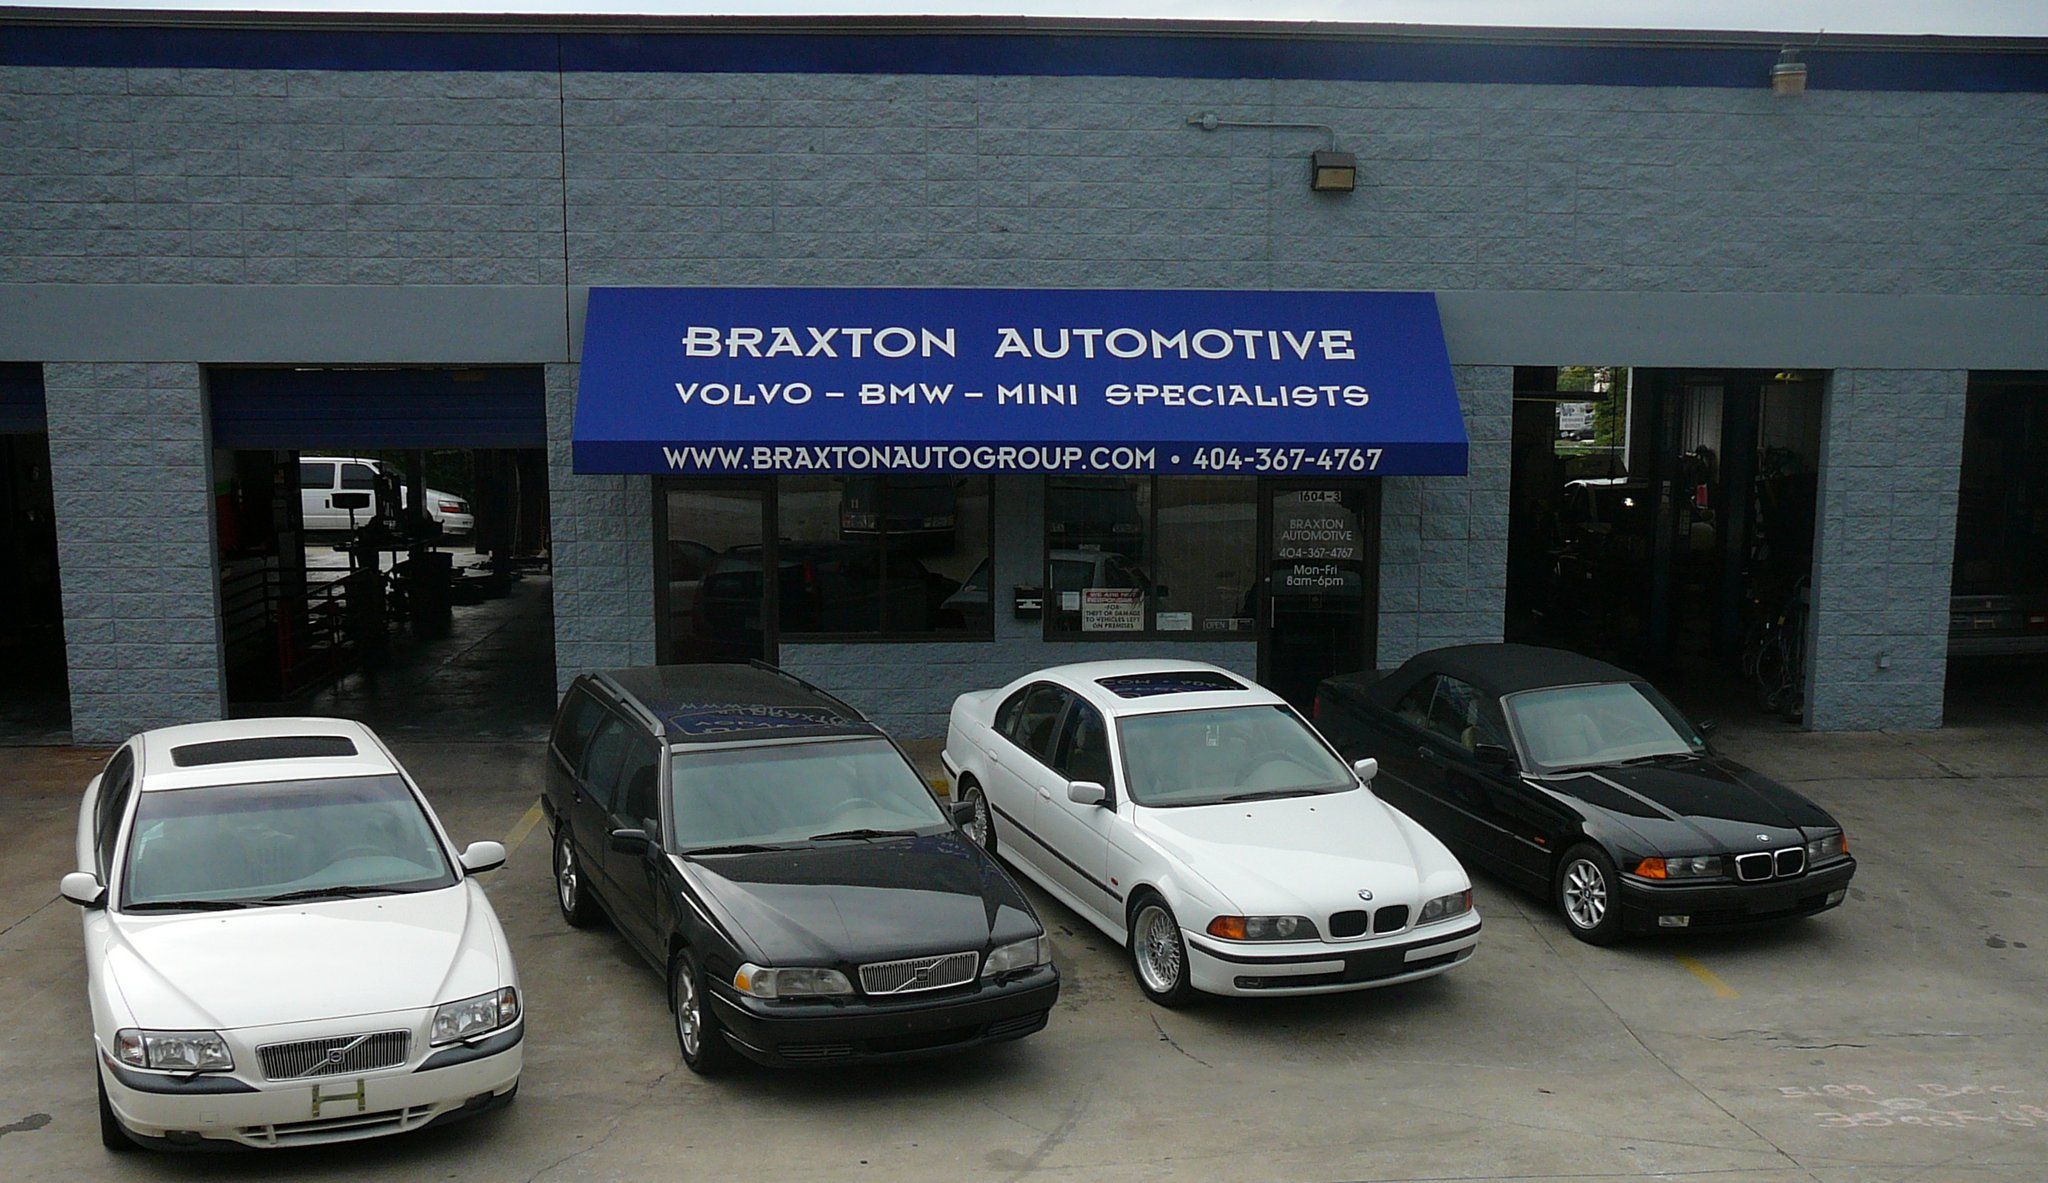 Braxton Automotive